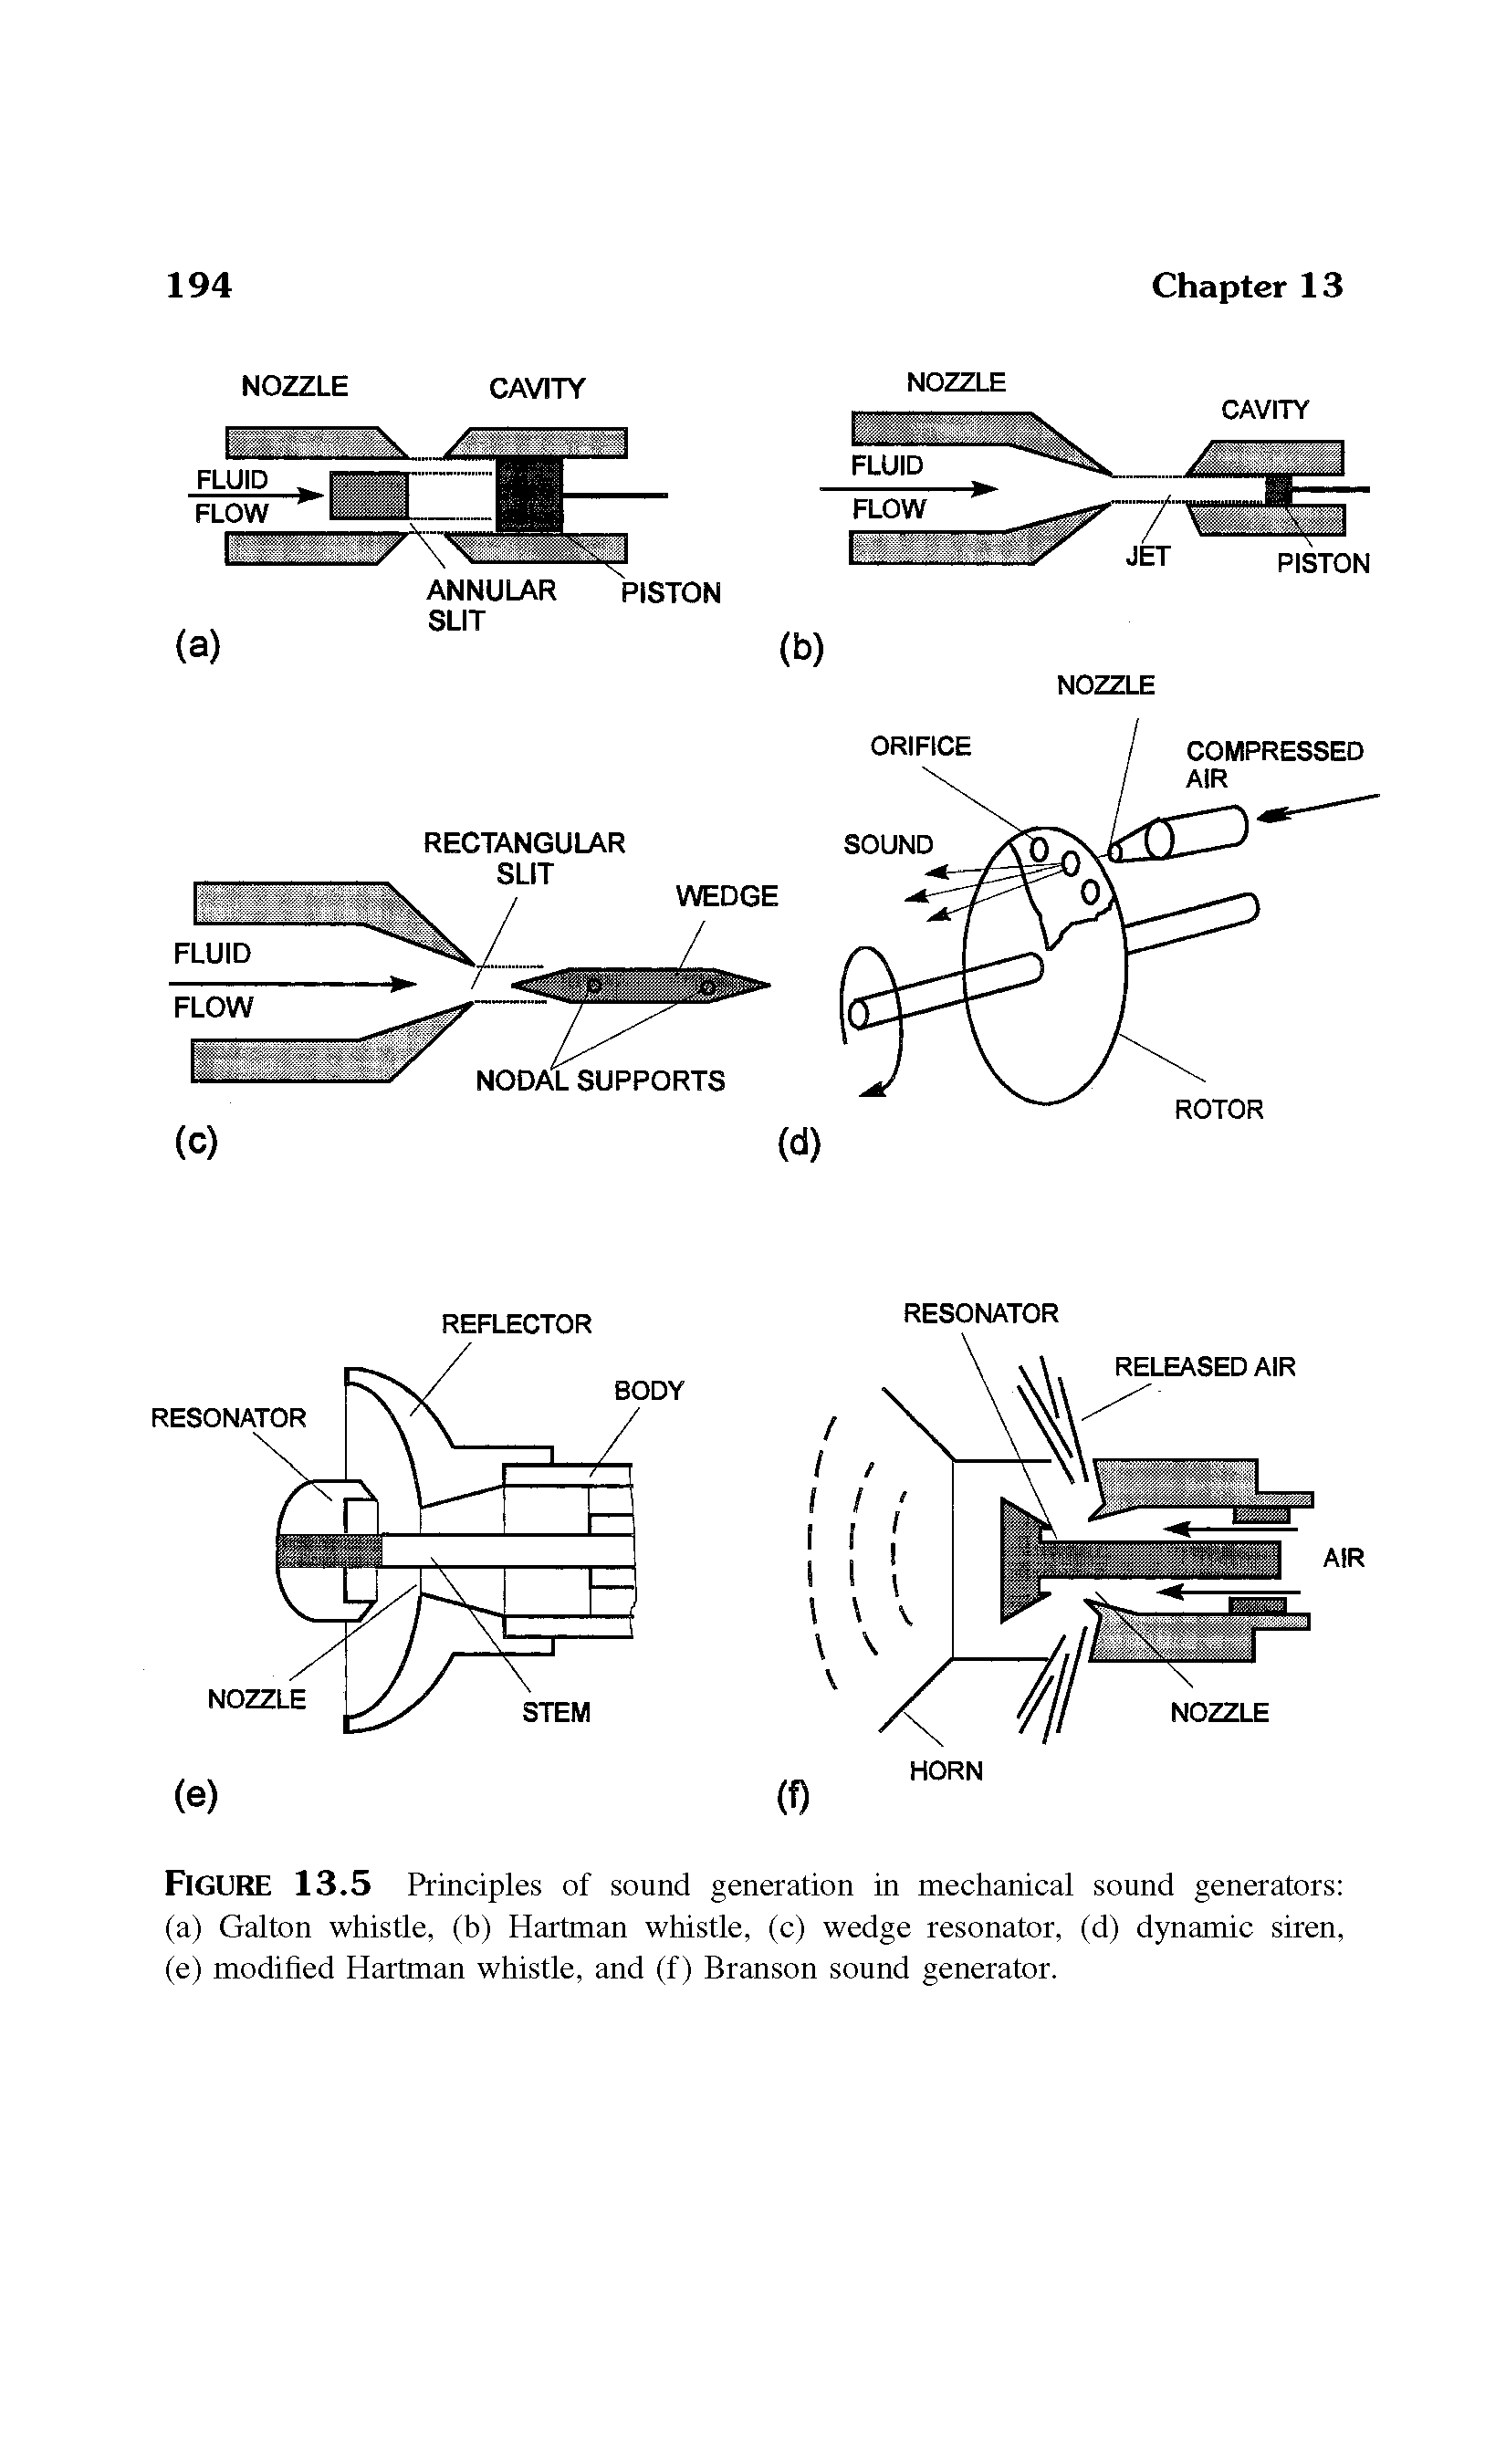 Figure 13.5 Principles of sound generation in mechanical sound generators (a) Galton whistle, (b) Hartman whistle, (c) wedge resonator, (d) dynamic siren, (e) modified Hartman whistle, and (f) Branson sound generator.